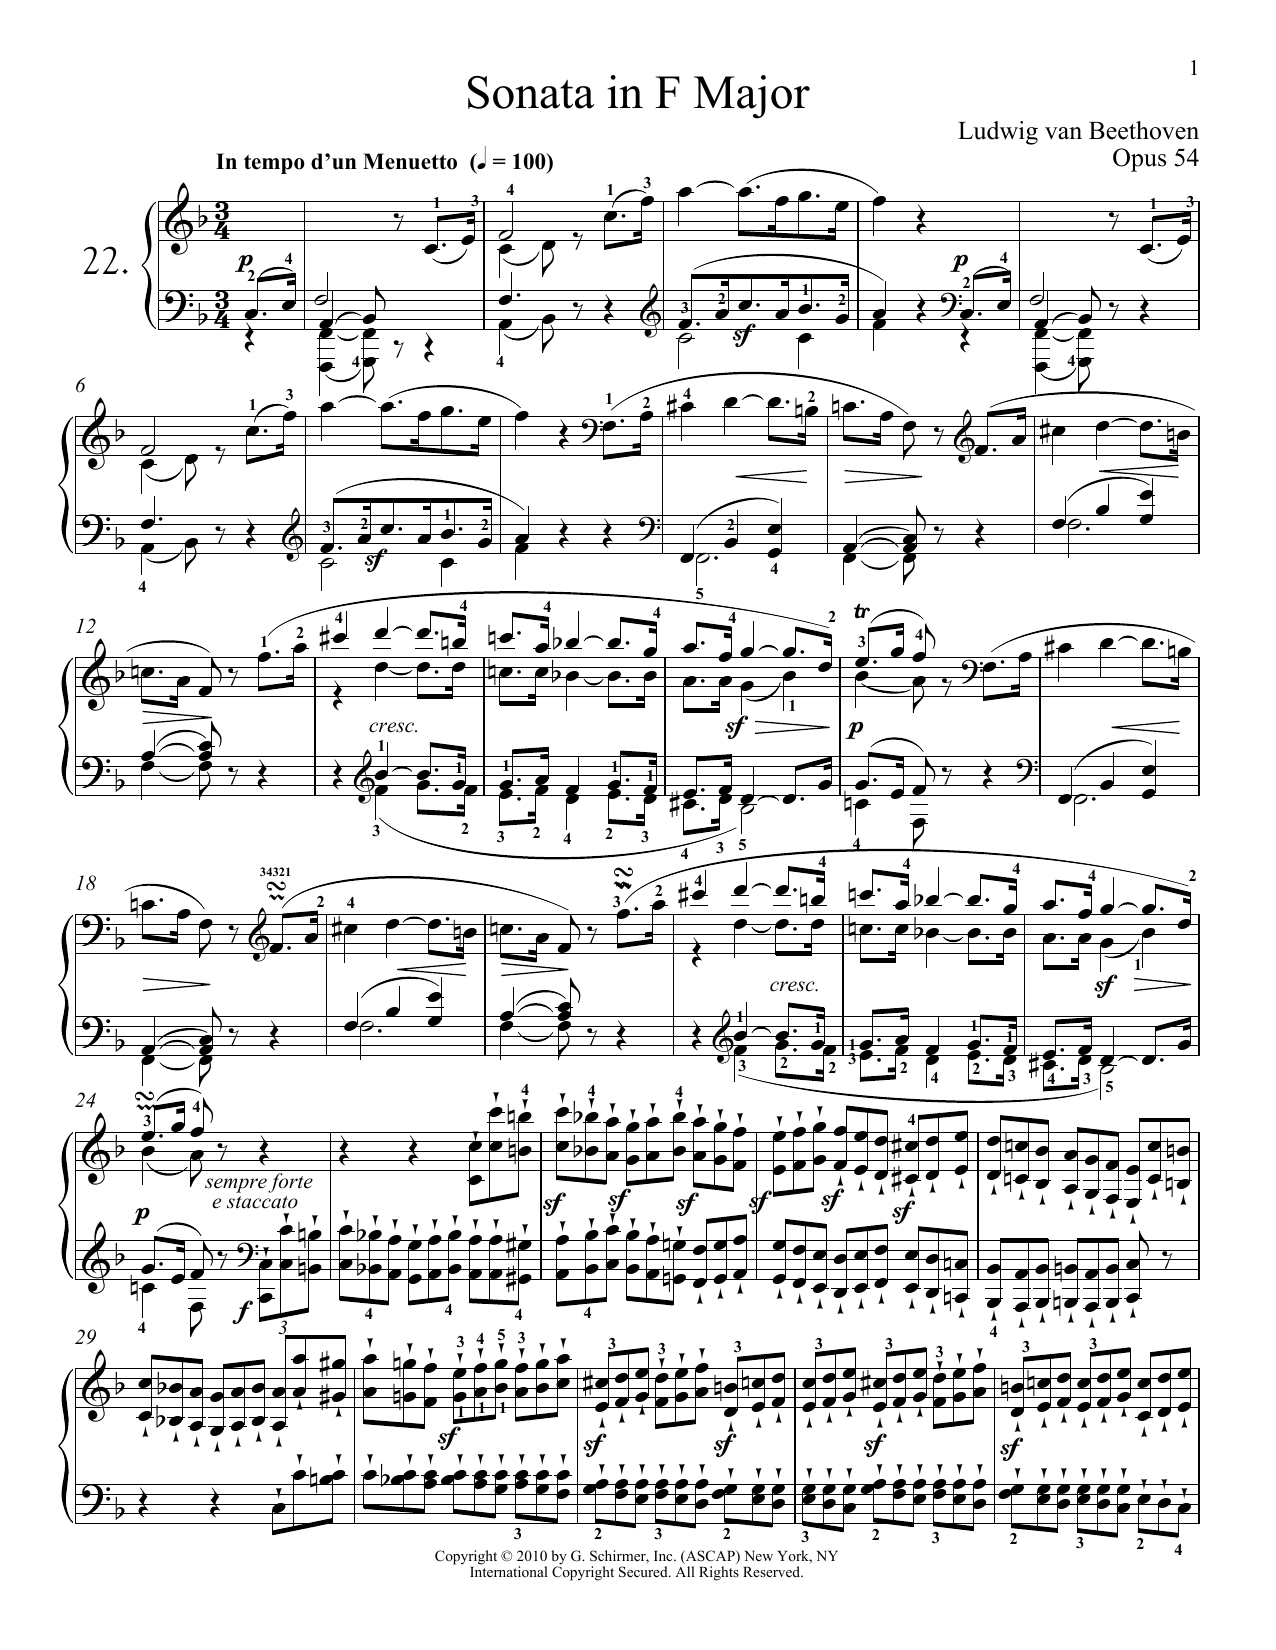 Ludwig van Beethoven Piano Sonata No. 22 In F Major, Op. 54 Sheet Music Notes & Chords for Piano - Download or Print PDF